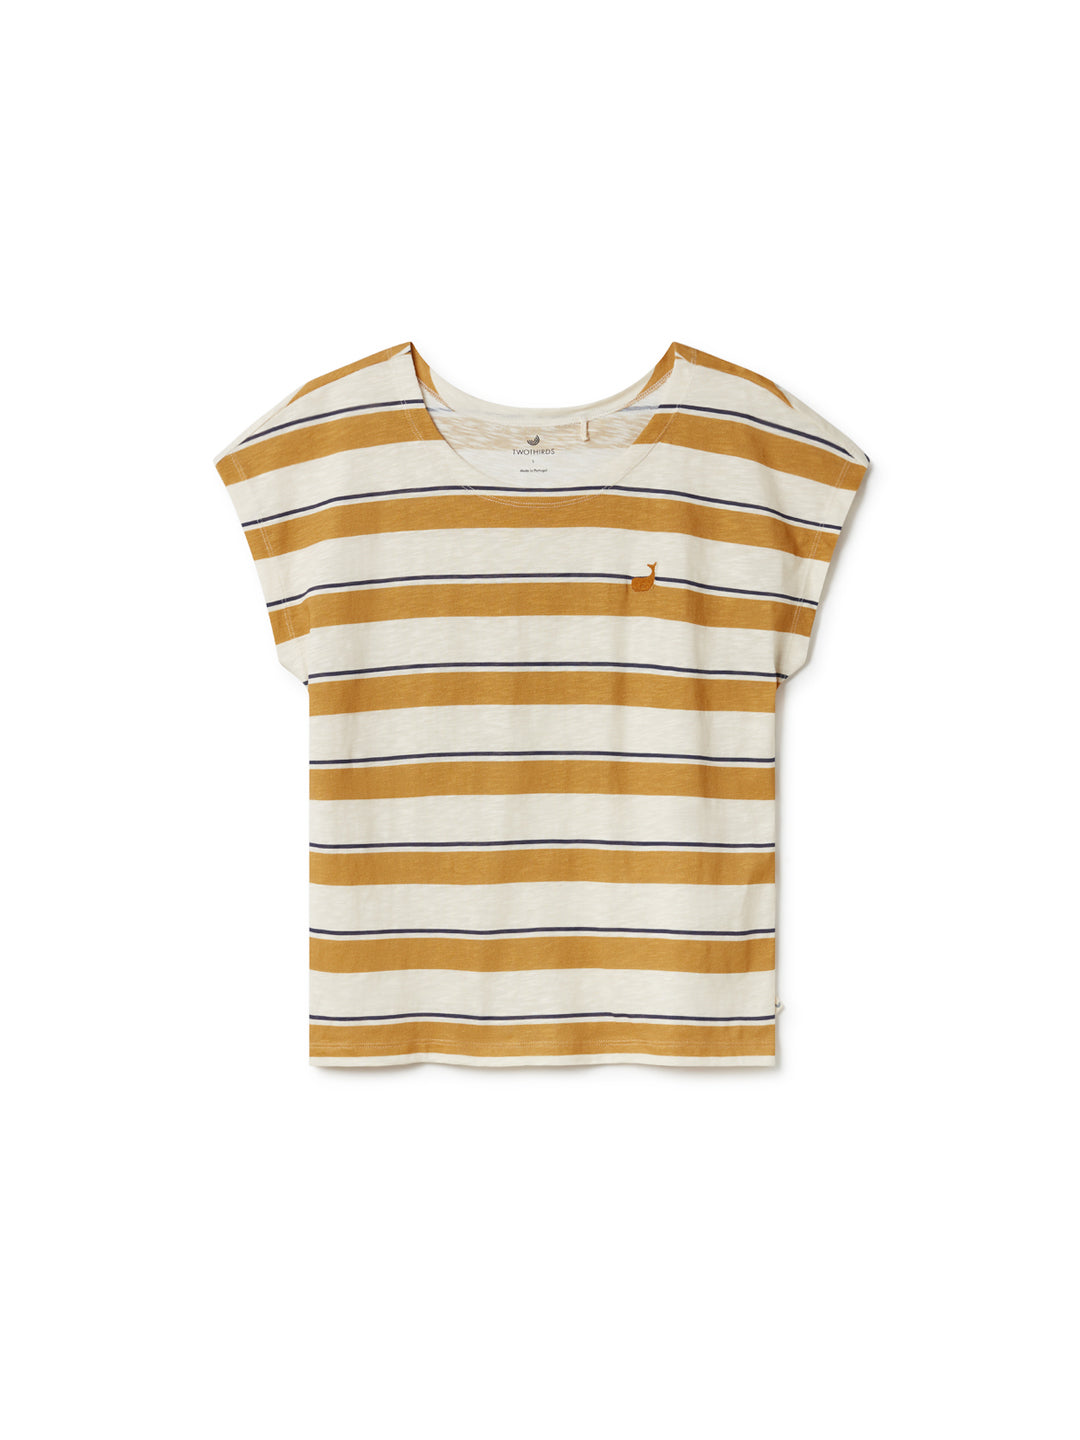 Evia - Mustard/Navy Stripes